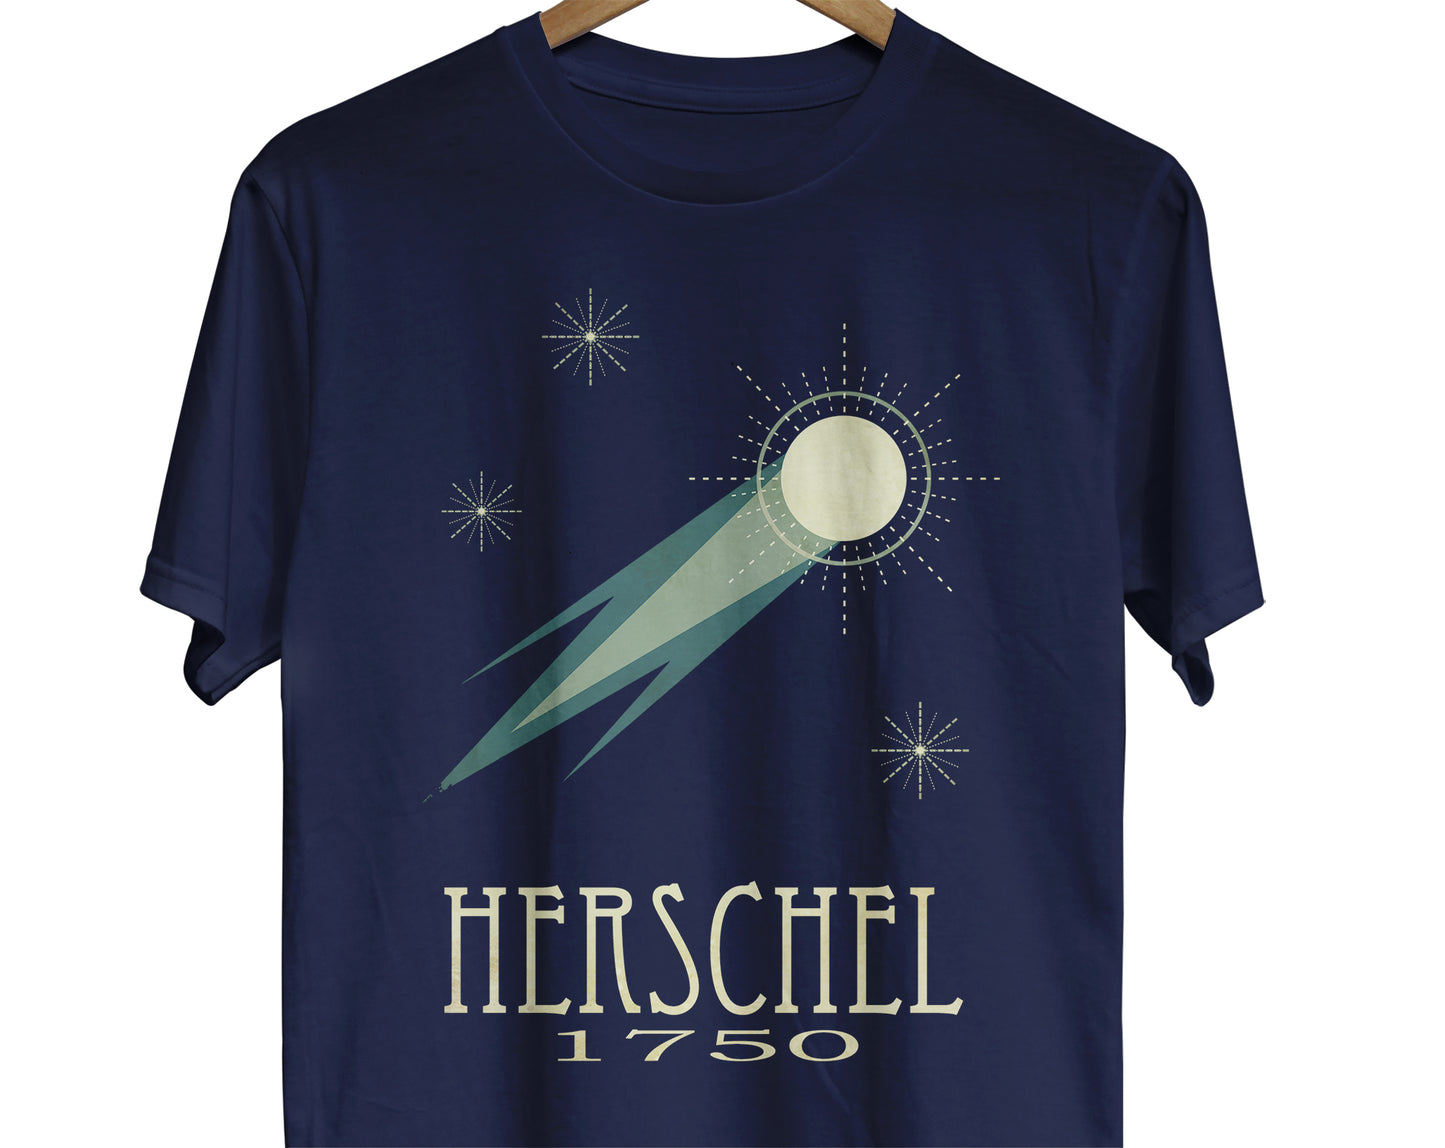 Caroline Herschel astronomer t-shirt with illustration of comet and stars